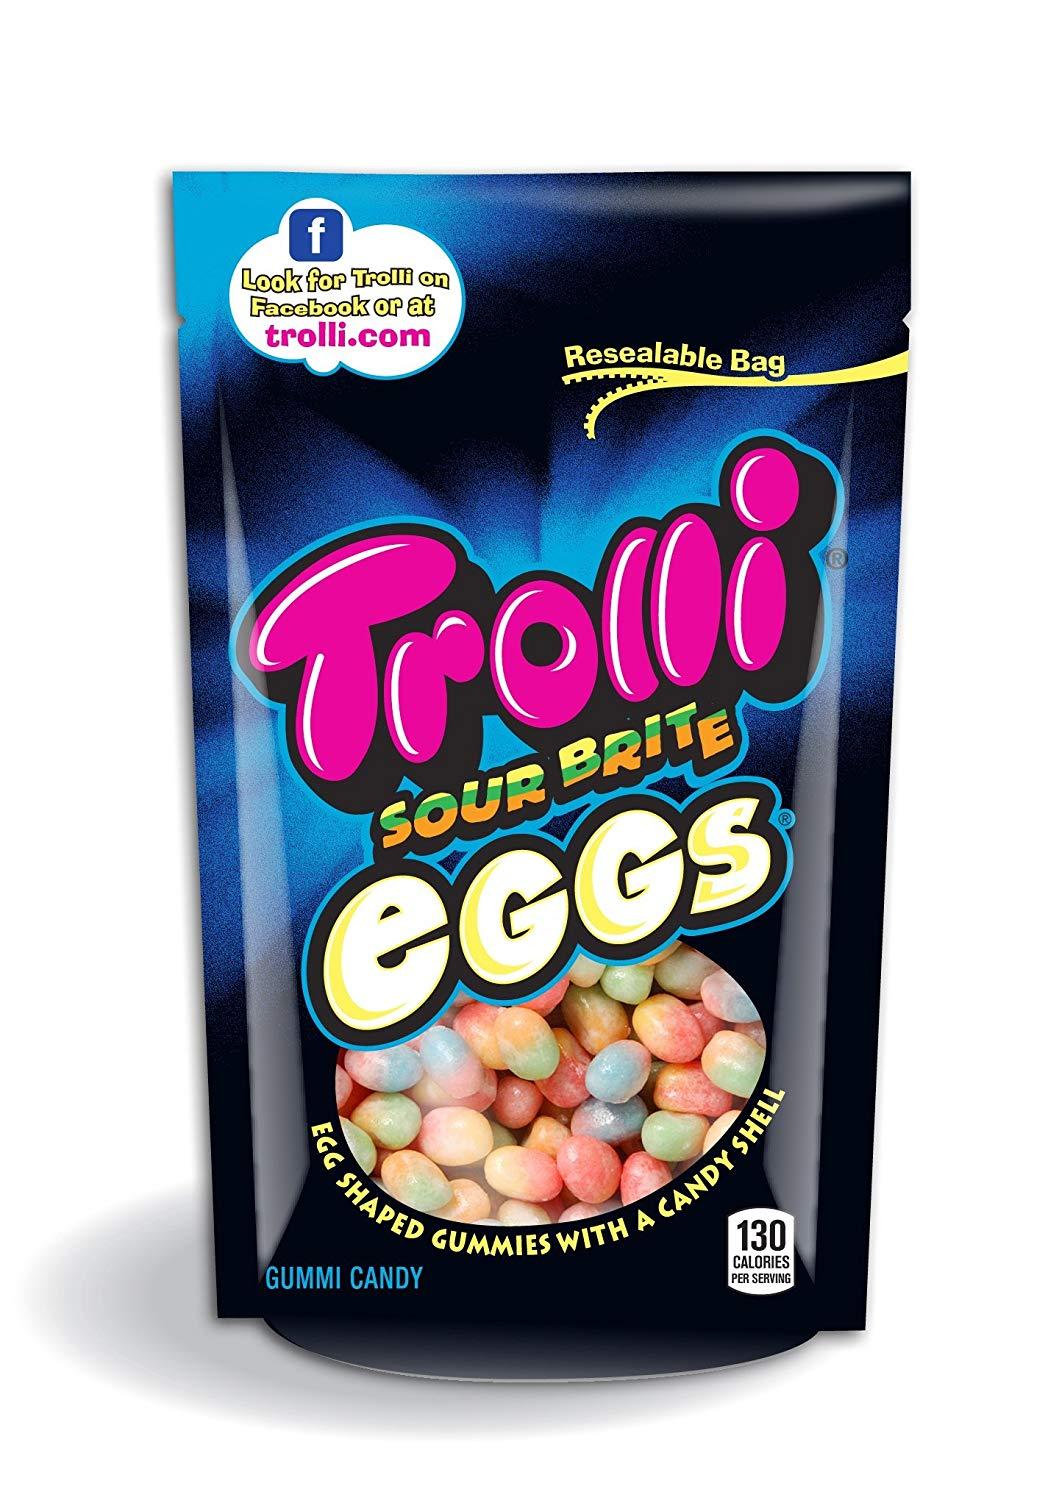 Trolli Logo - Amazon.com : Trolli Sour Brite Eggs Gummy Candy, 10 Ounce Bag pack